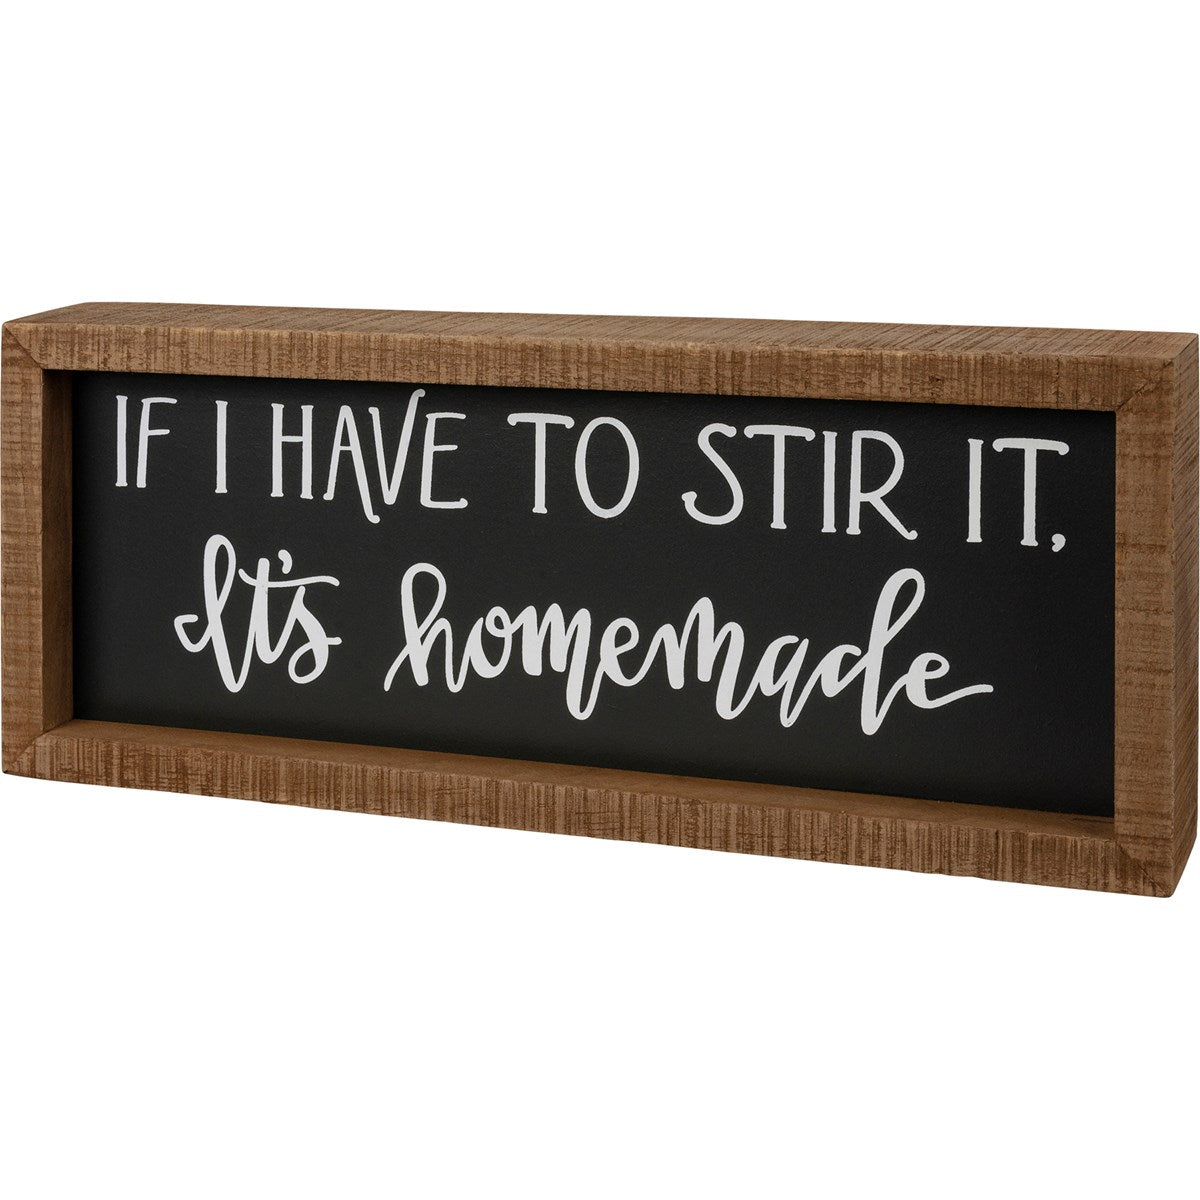 Stir It, It's Homemade - Sign